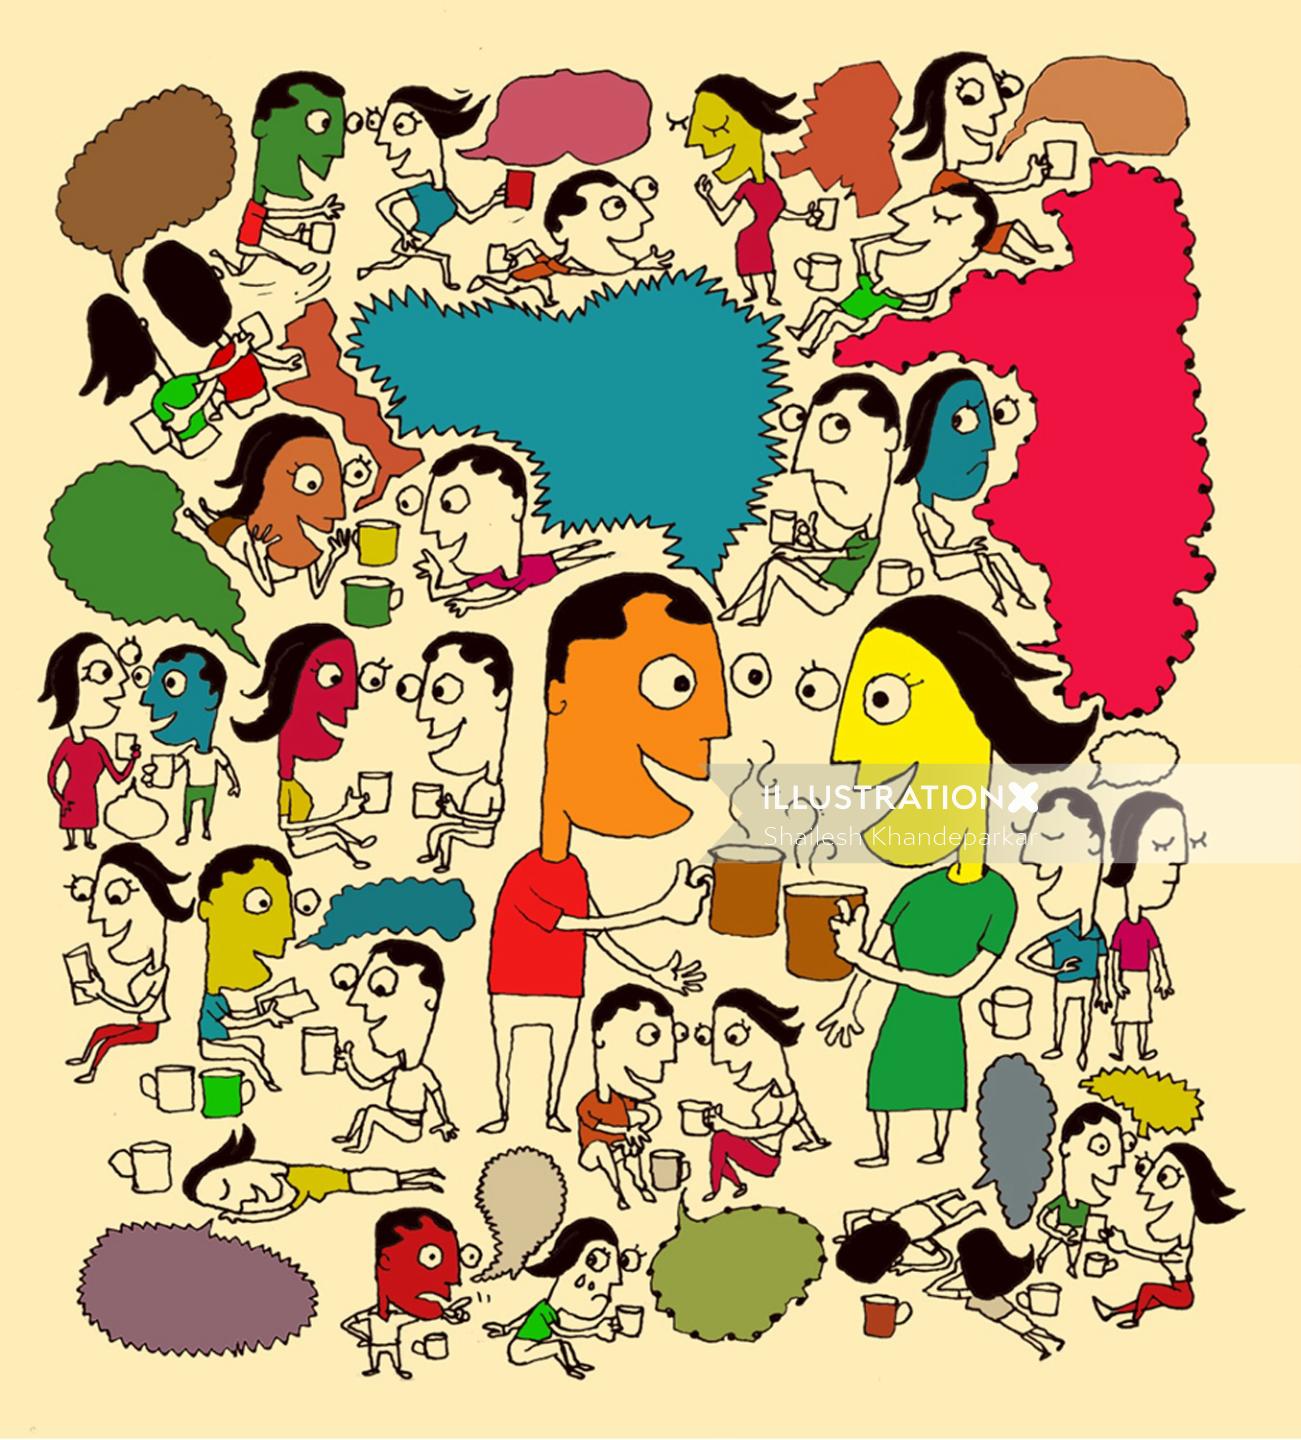 Graphic design of bru 'people'